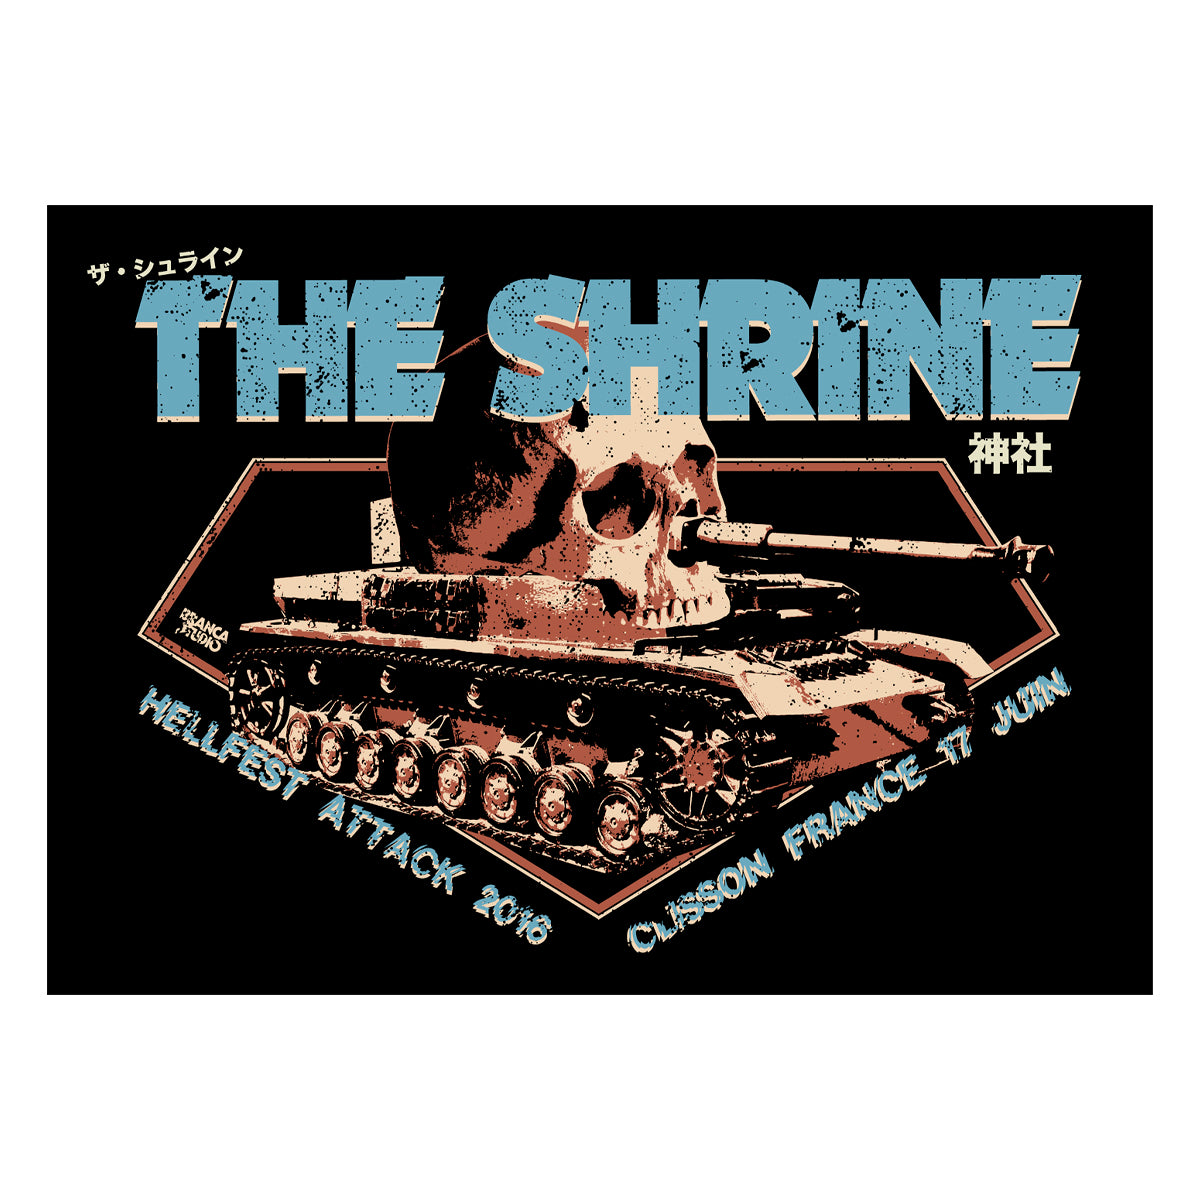 THE SHRINE - Hellfest 2016